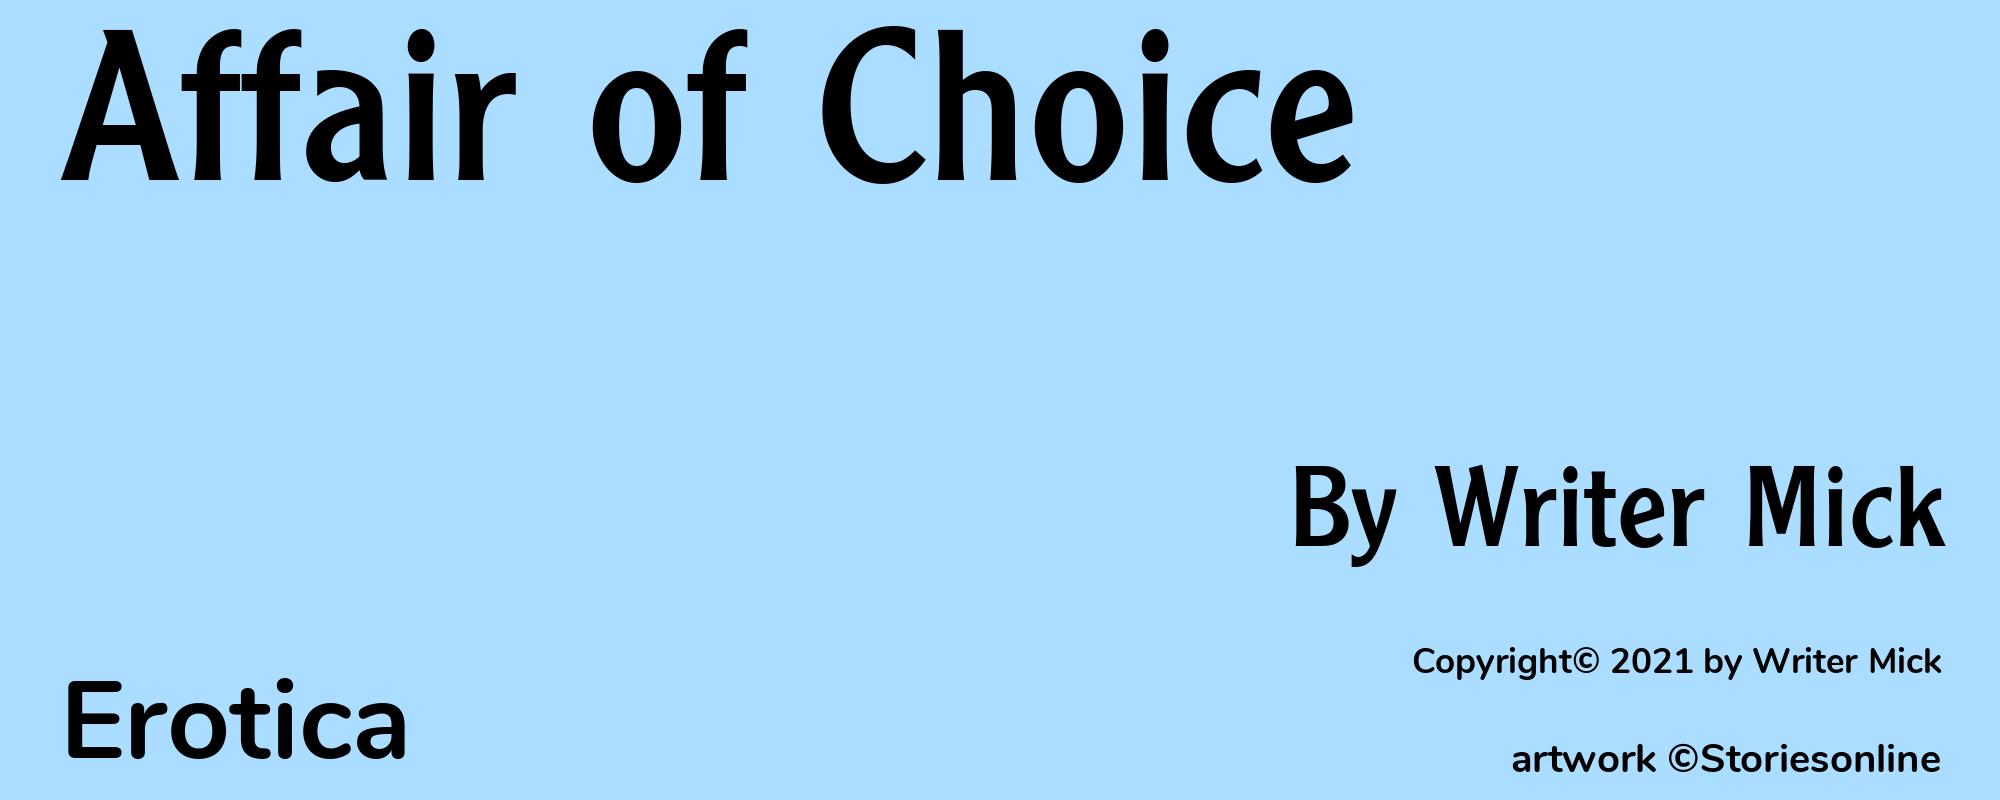 Affair of Choice - Cover